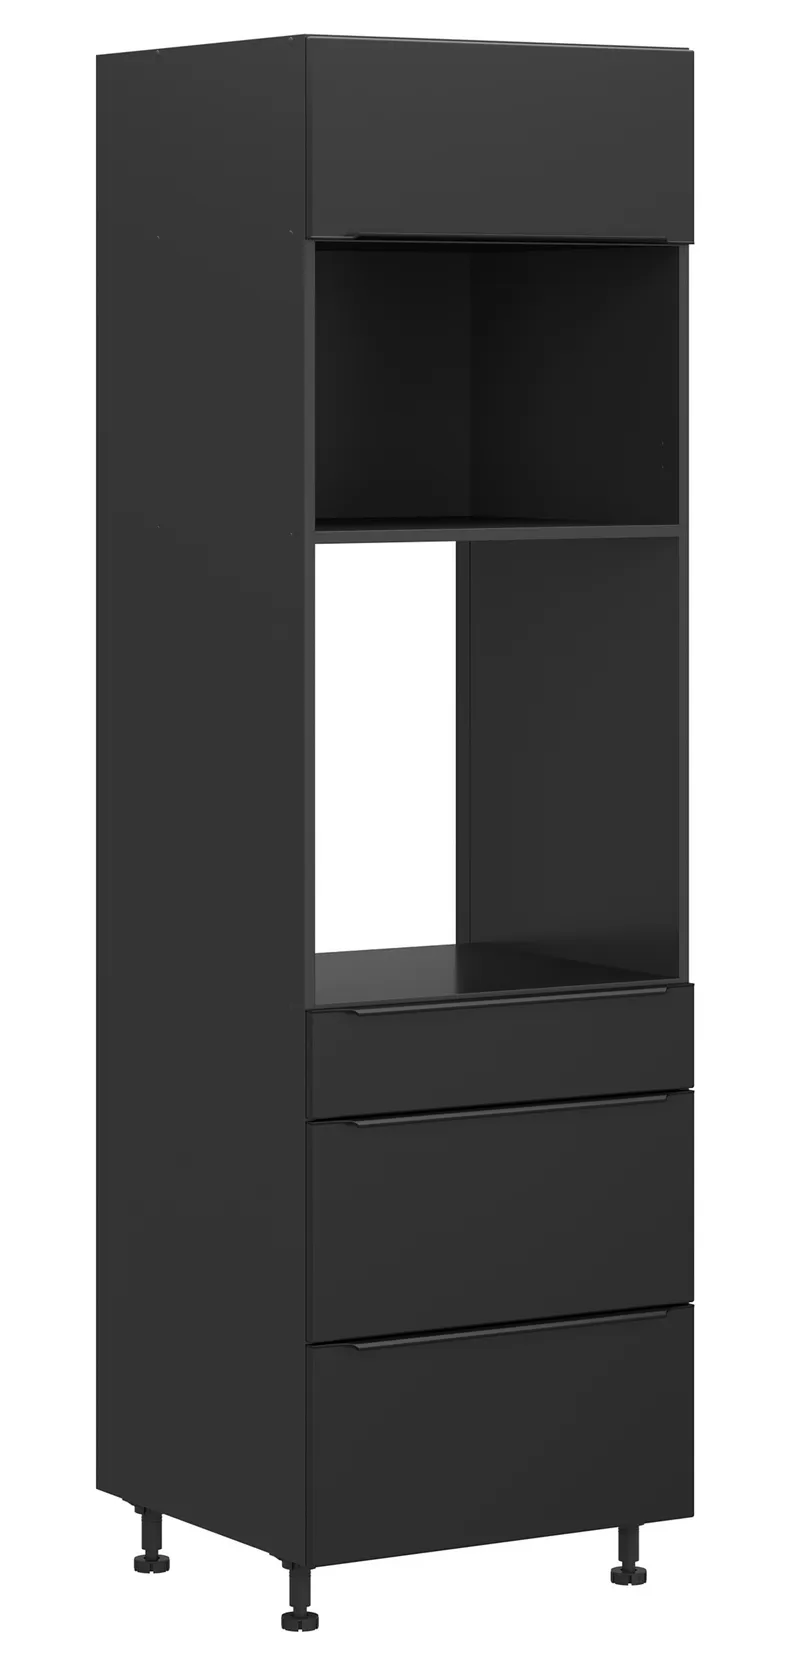 BRW Кухонный шкаф для духовки Sole L6 60 см с ящиками черный матовый, черный/черный матовый FM_DPS_60/207_2SMB/SMB/O-CA/CAM фото №2